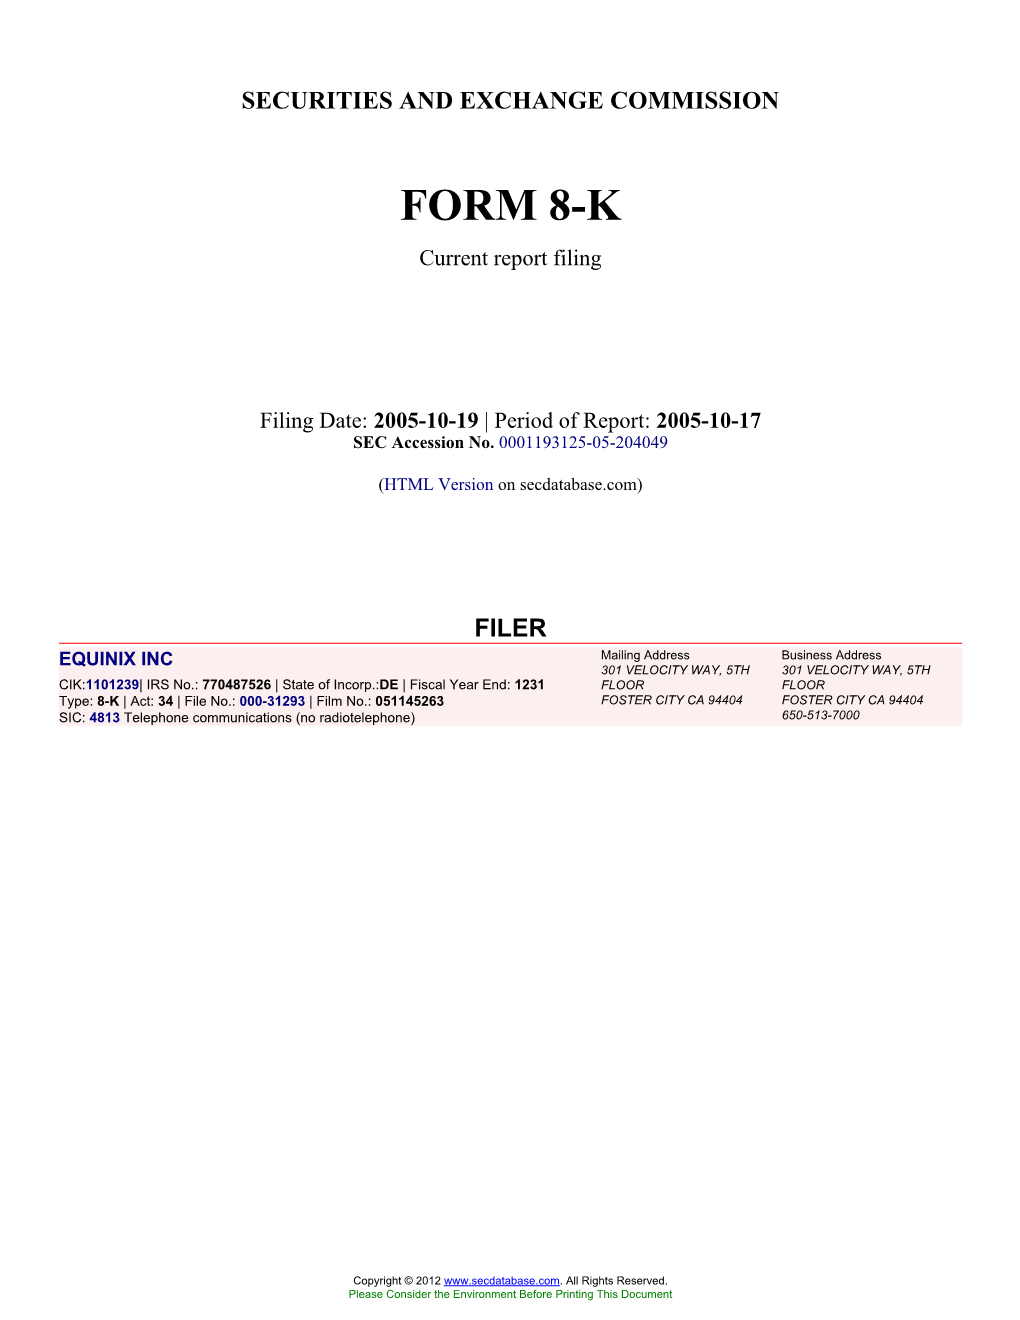 EQUINIX INC (Form: 8-K, Filing Date: 10/19/2005)